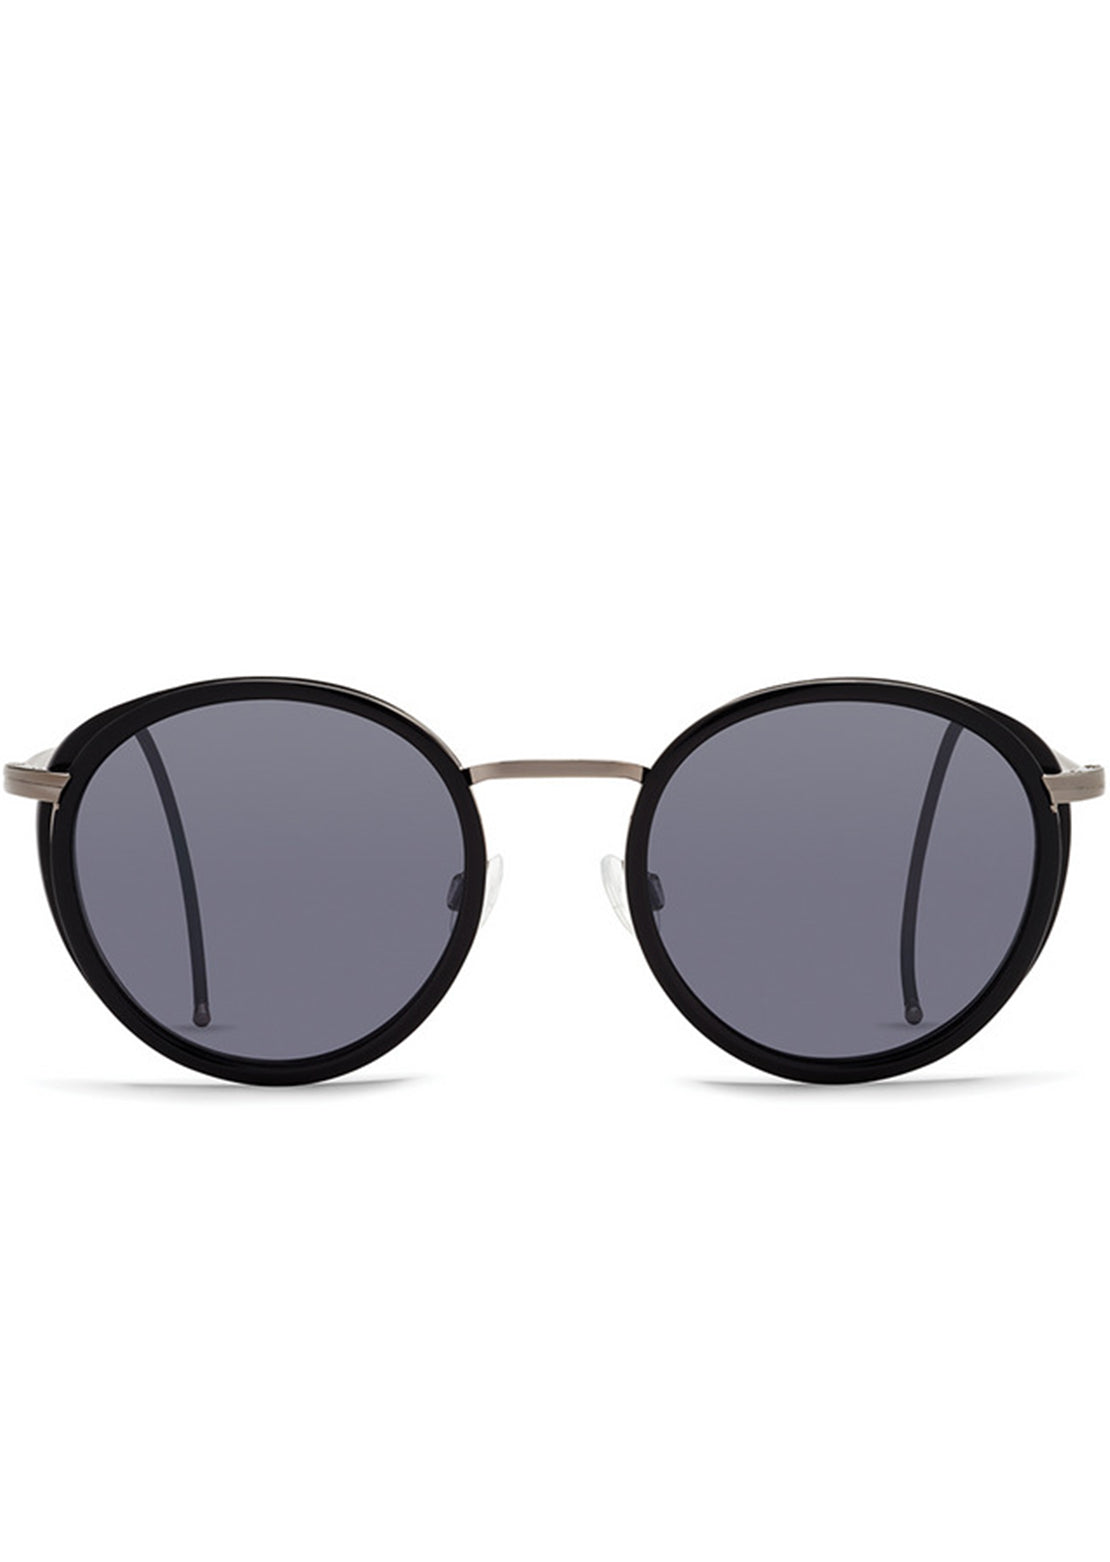 Von Zipper Empire Sunglasses Black Gloss/Vintage Grey